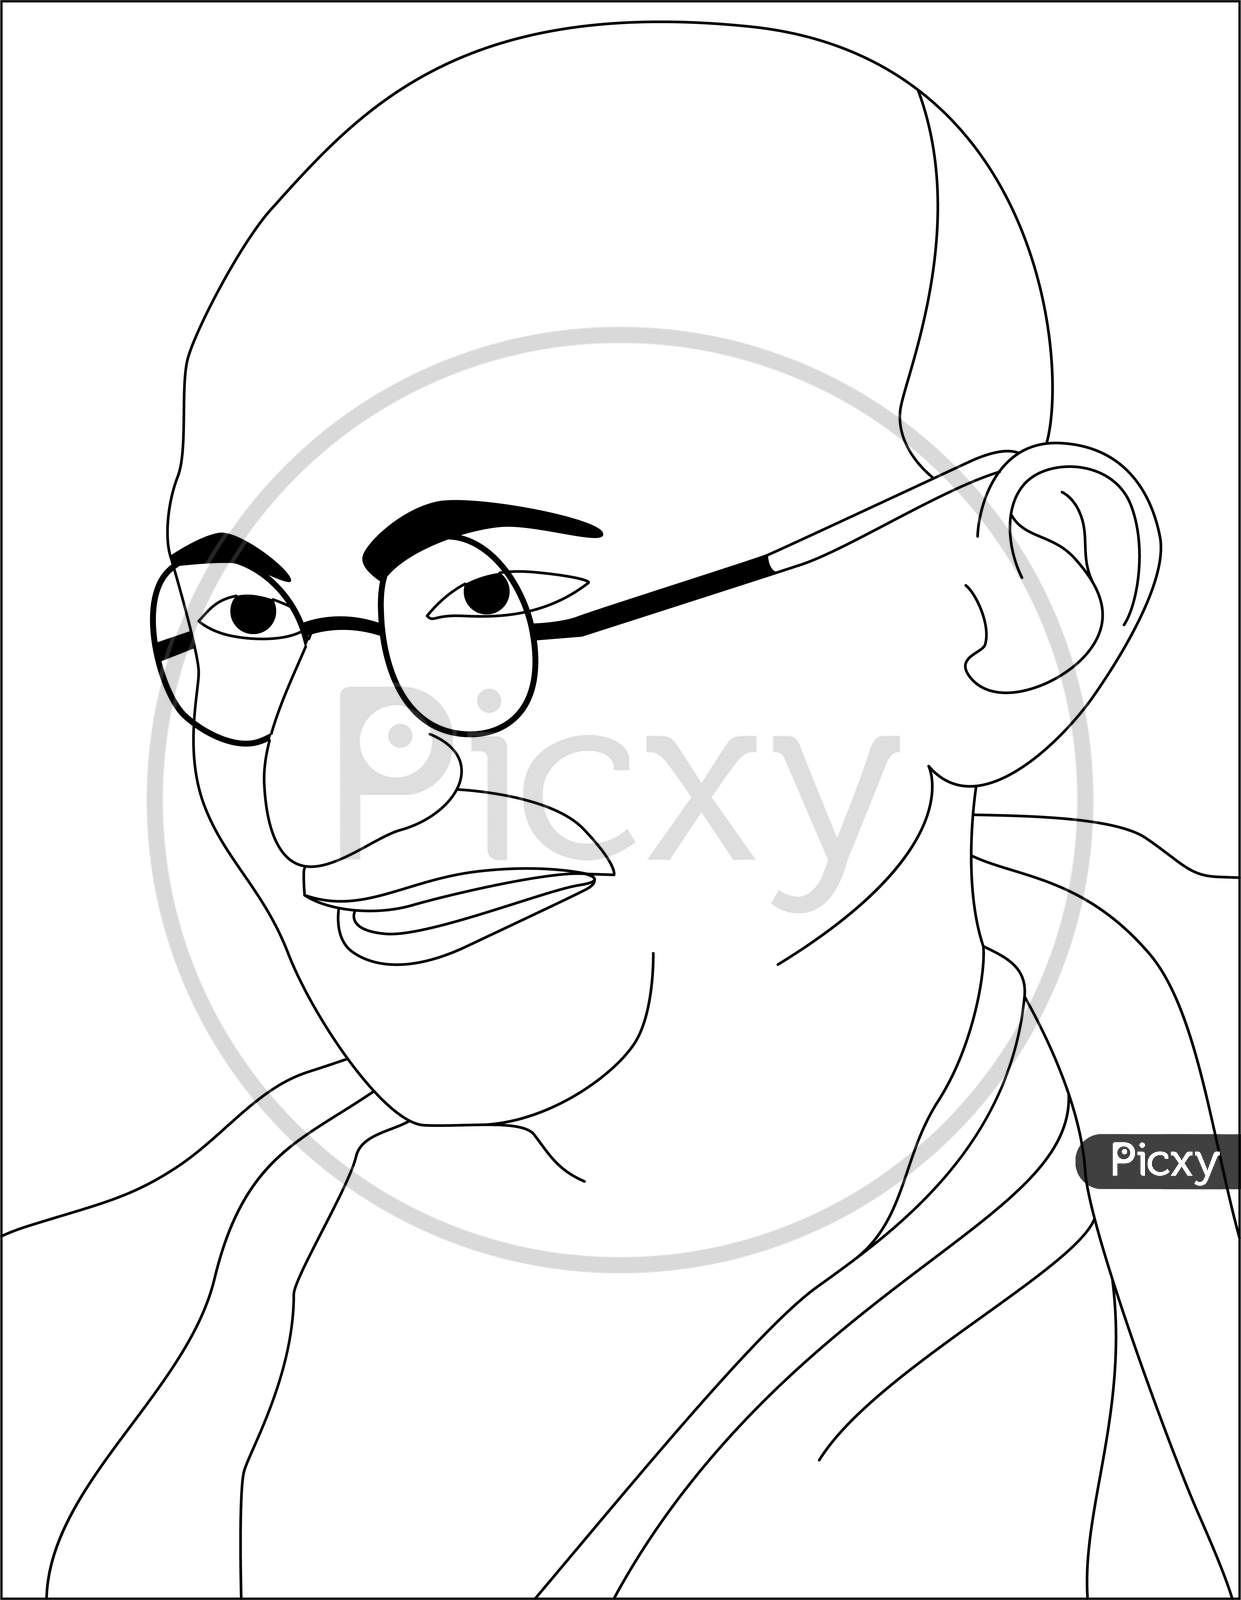 Image of Gandhi Jayanti - Vector Character Illustration Of Gandhiji .-XG973078-Picxy